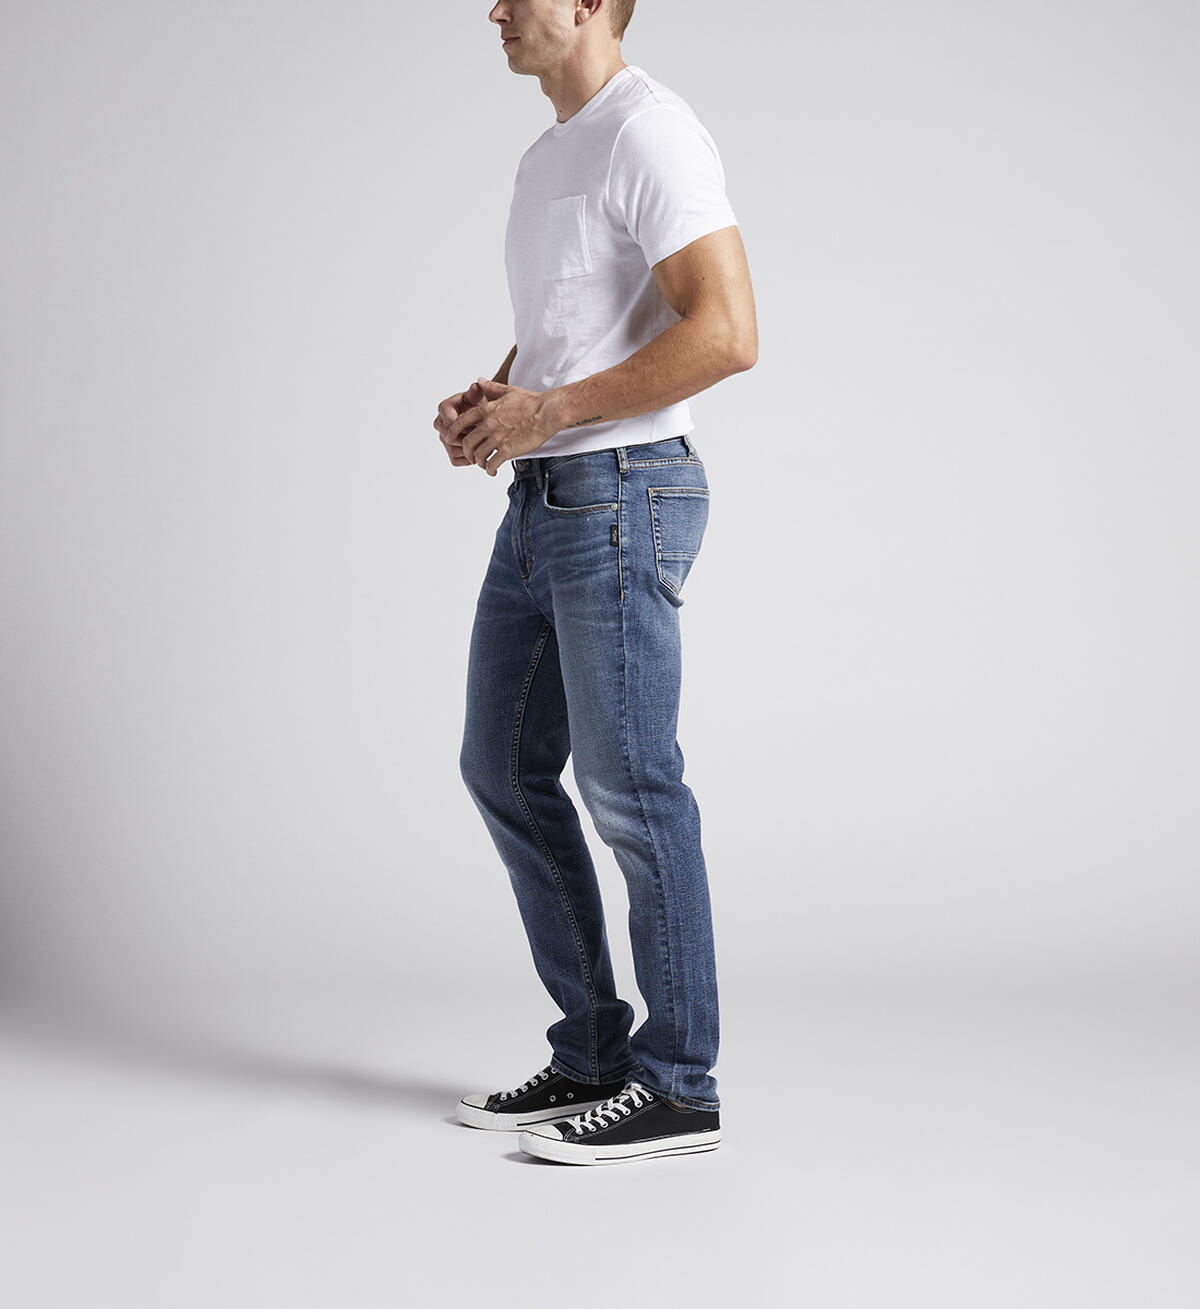 Kenaston Slim Fit Slim Leg Jeans, , hi-res image number 2